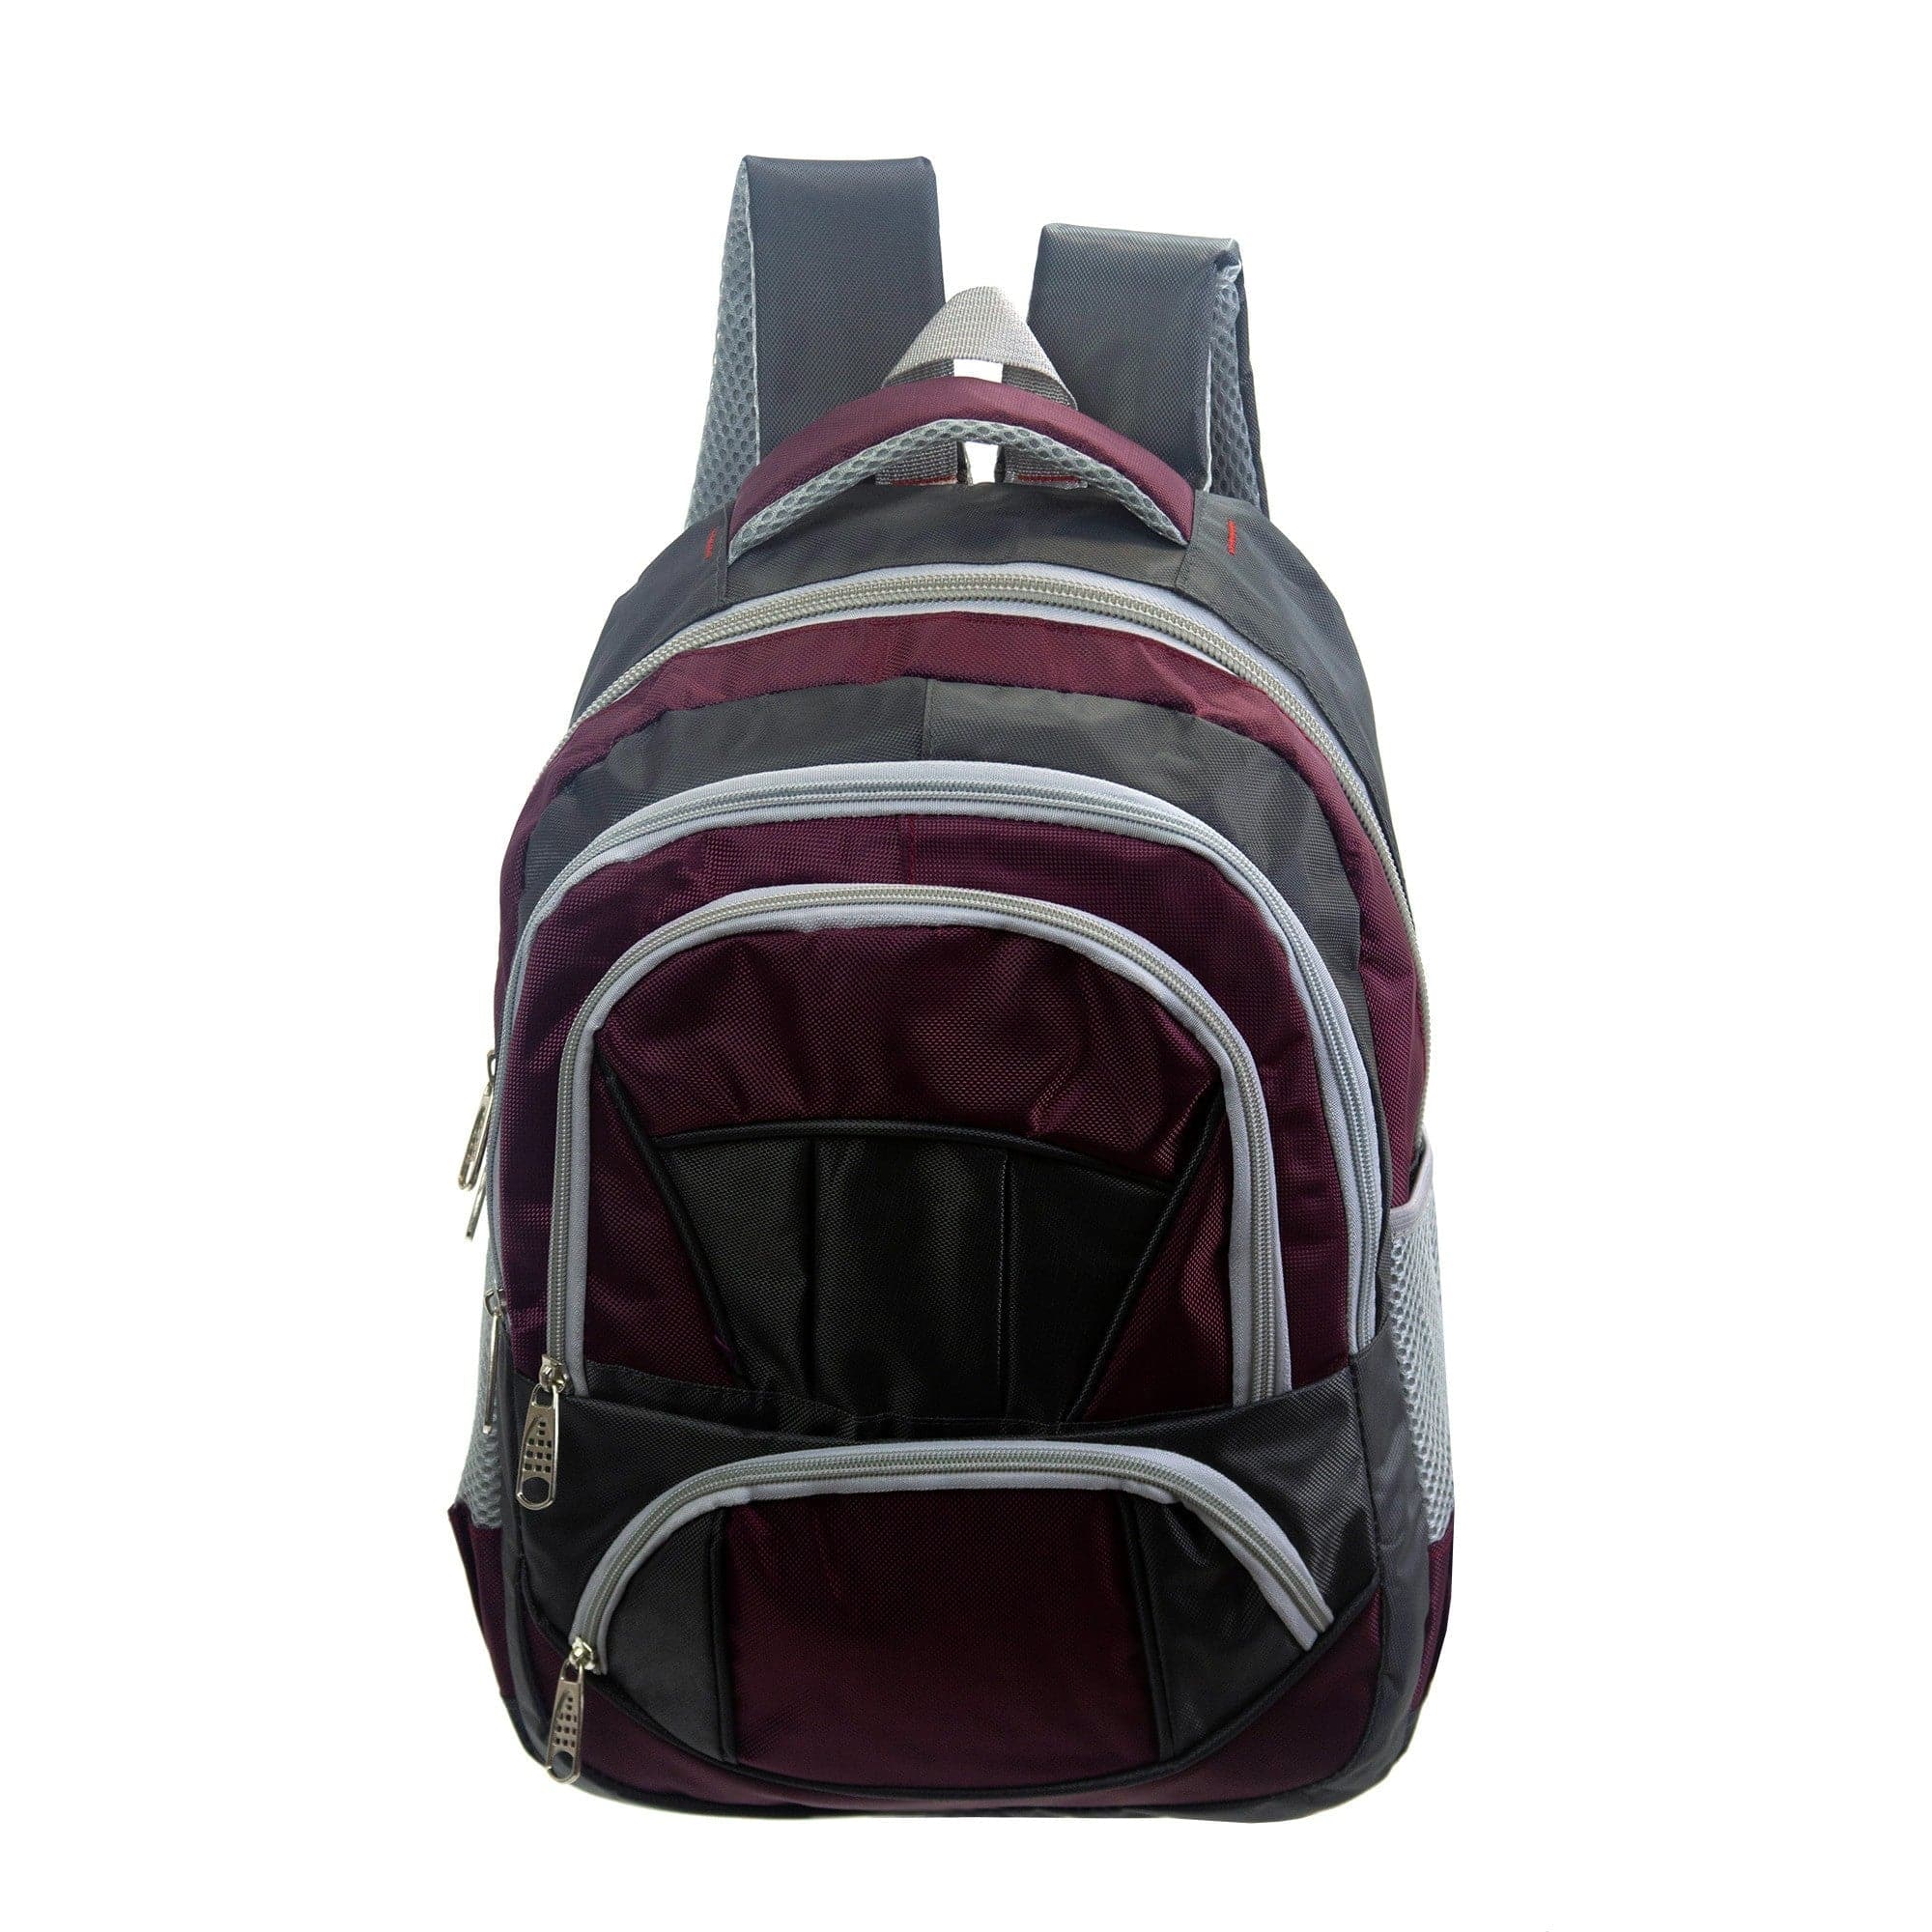 16" Premium Padded Wholesale Backpacks in 6 Assorted Colors - Bulk Case of 24 Bookbags